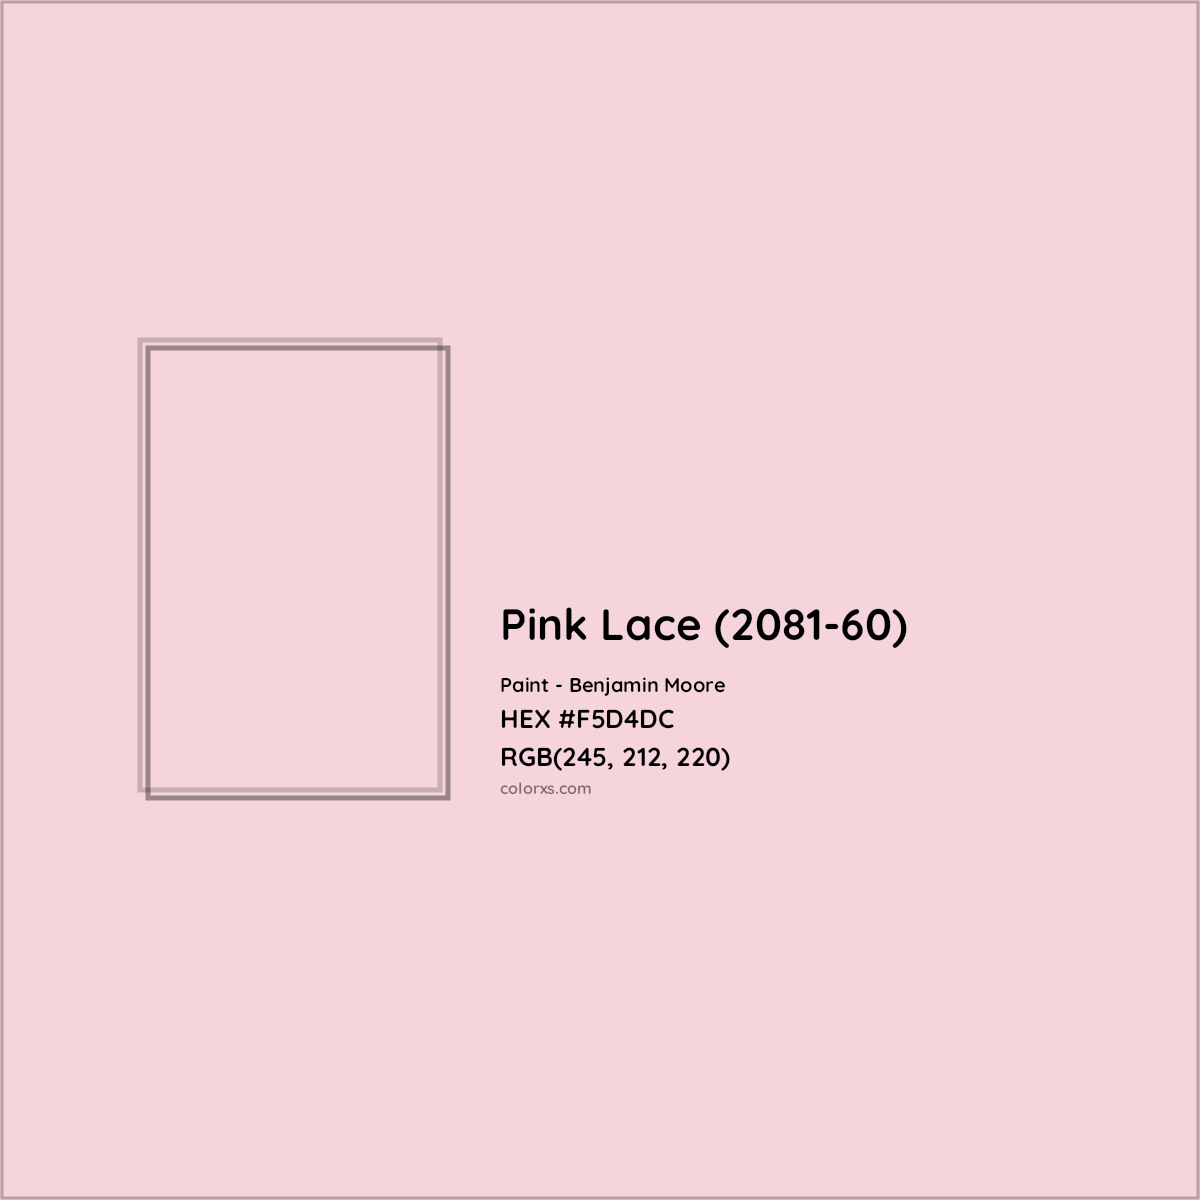 HEX #F5D4DC Pink Lace (2081-60) Paint Benjamin Moore - Color Code